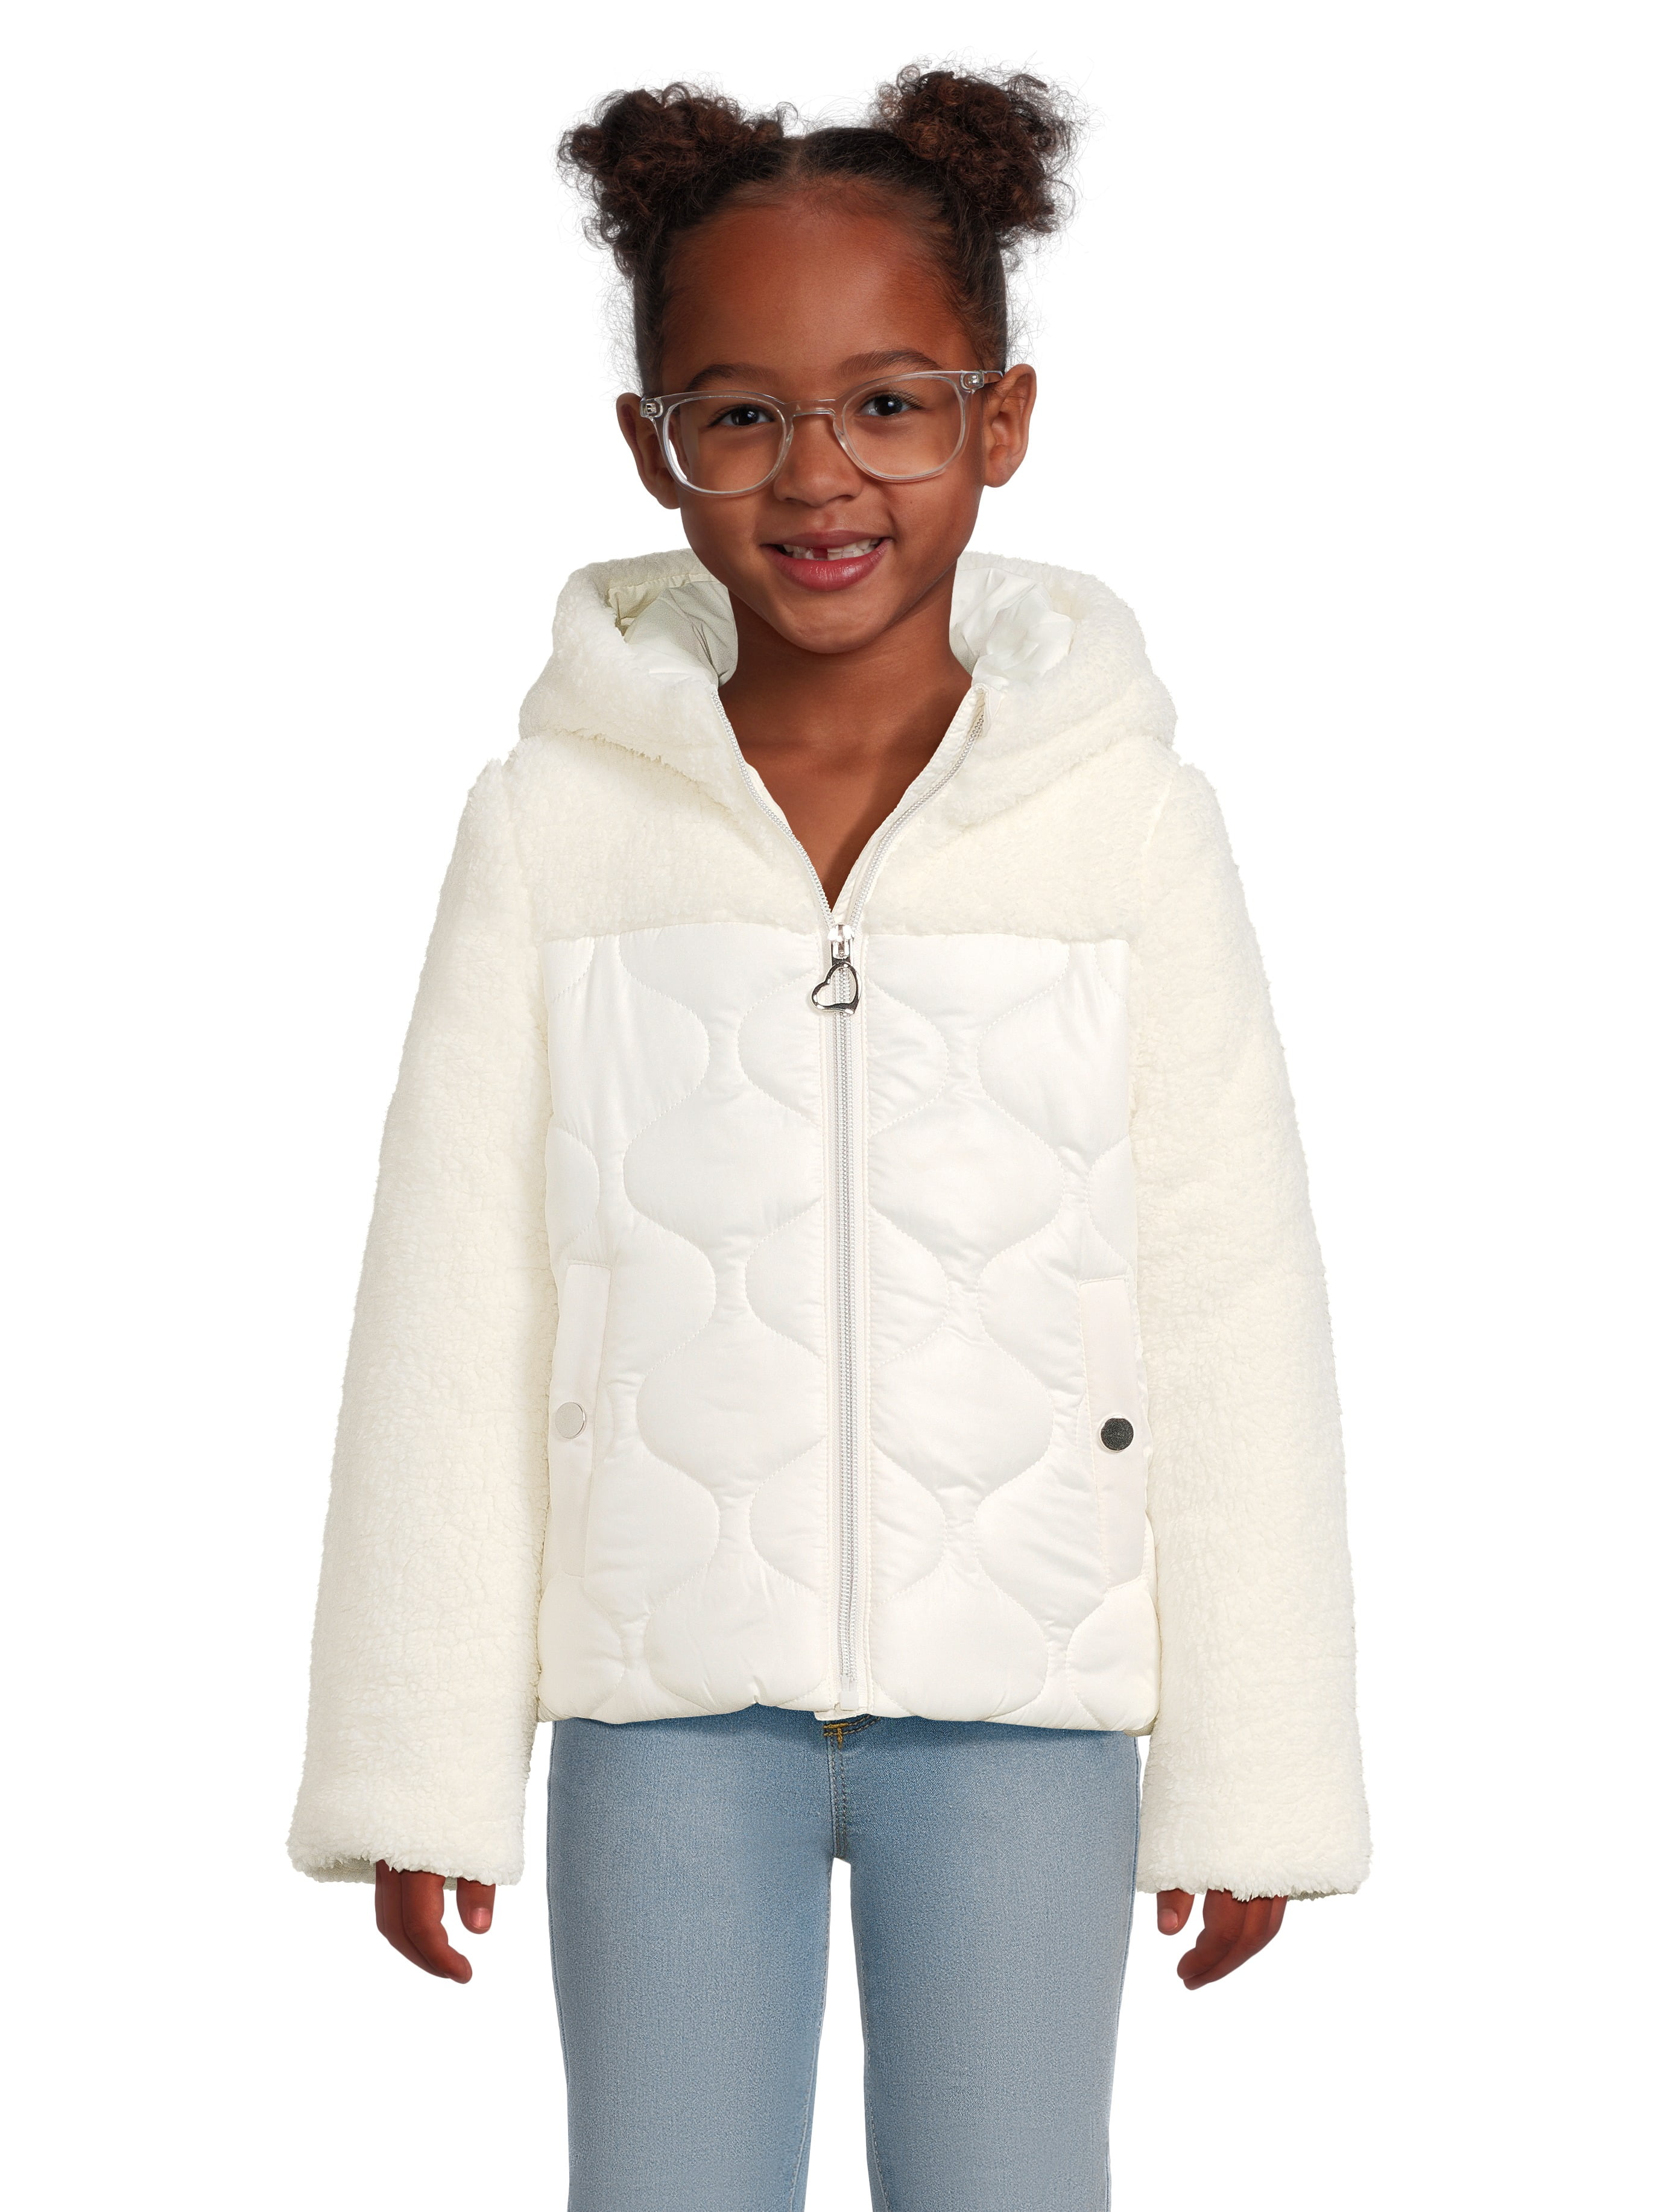 Swiss Alps Girls Hooded Quilted Fleece Jacket, Sizes 4-16 - Walmart.com